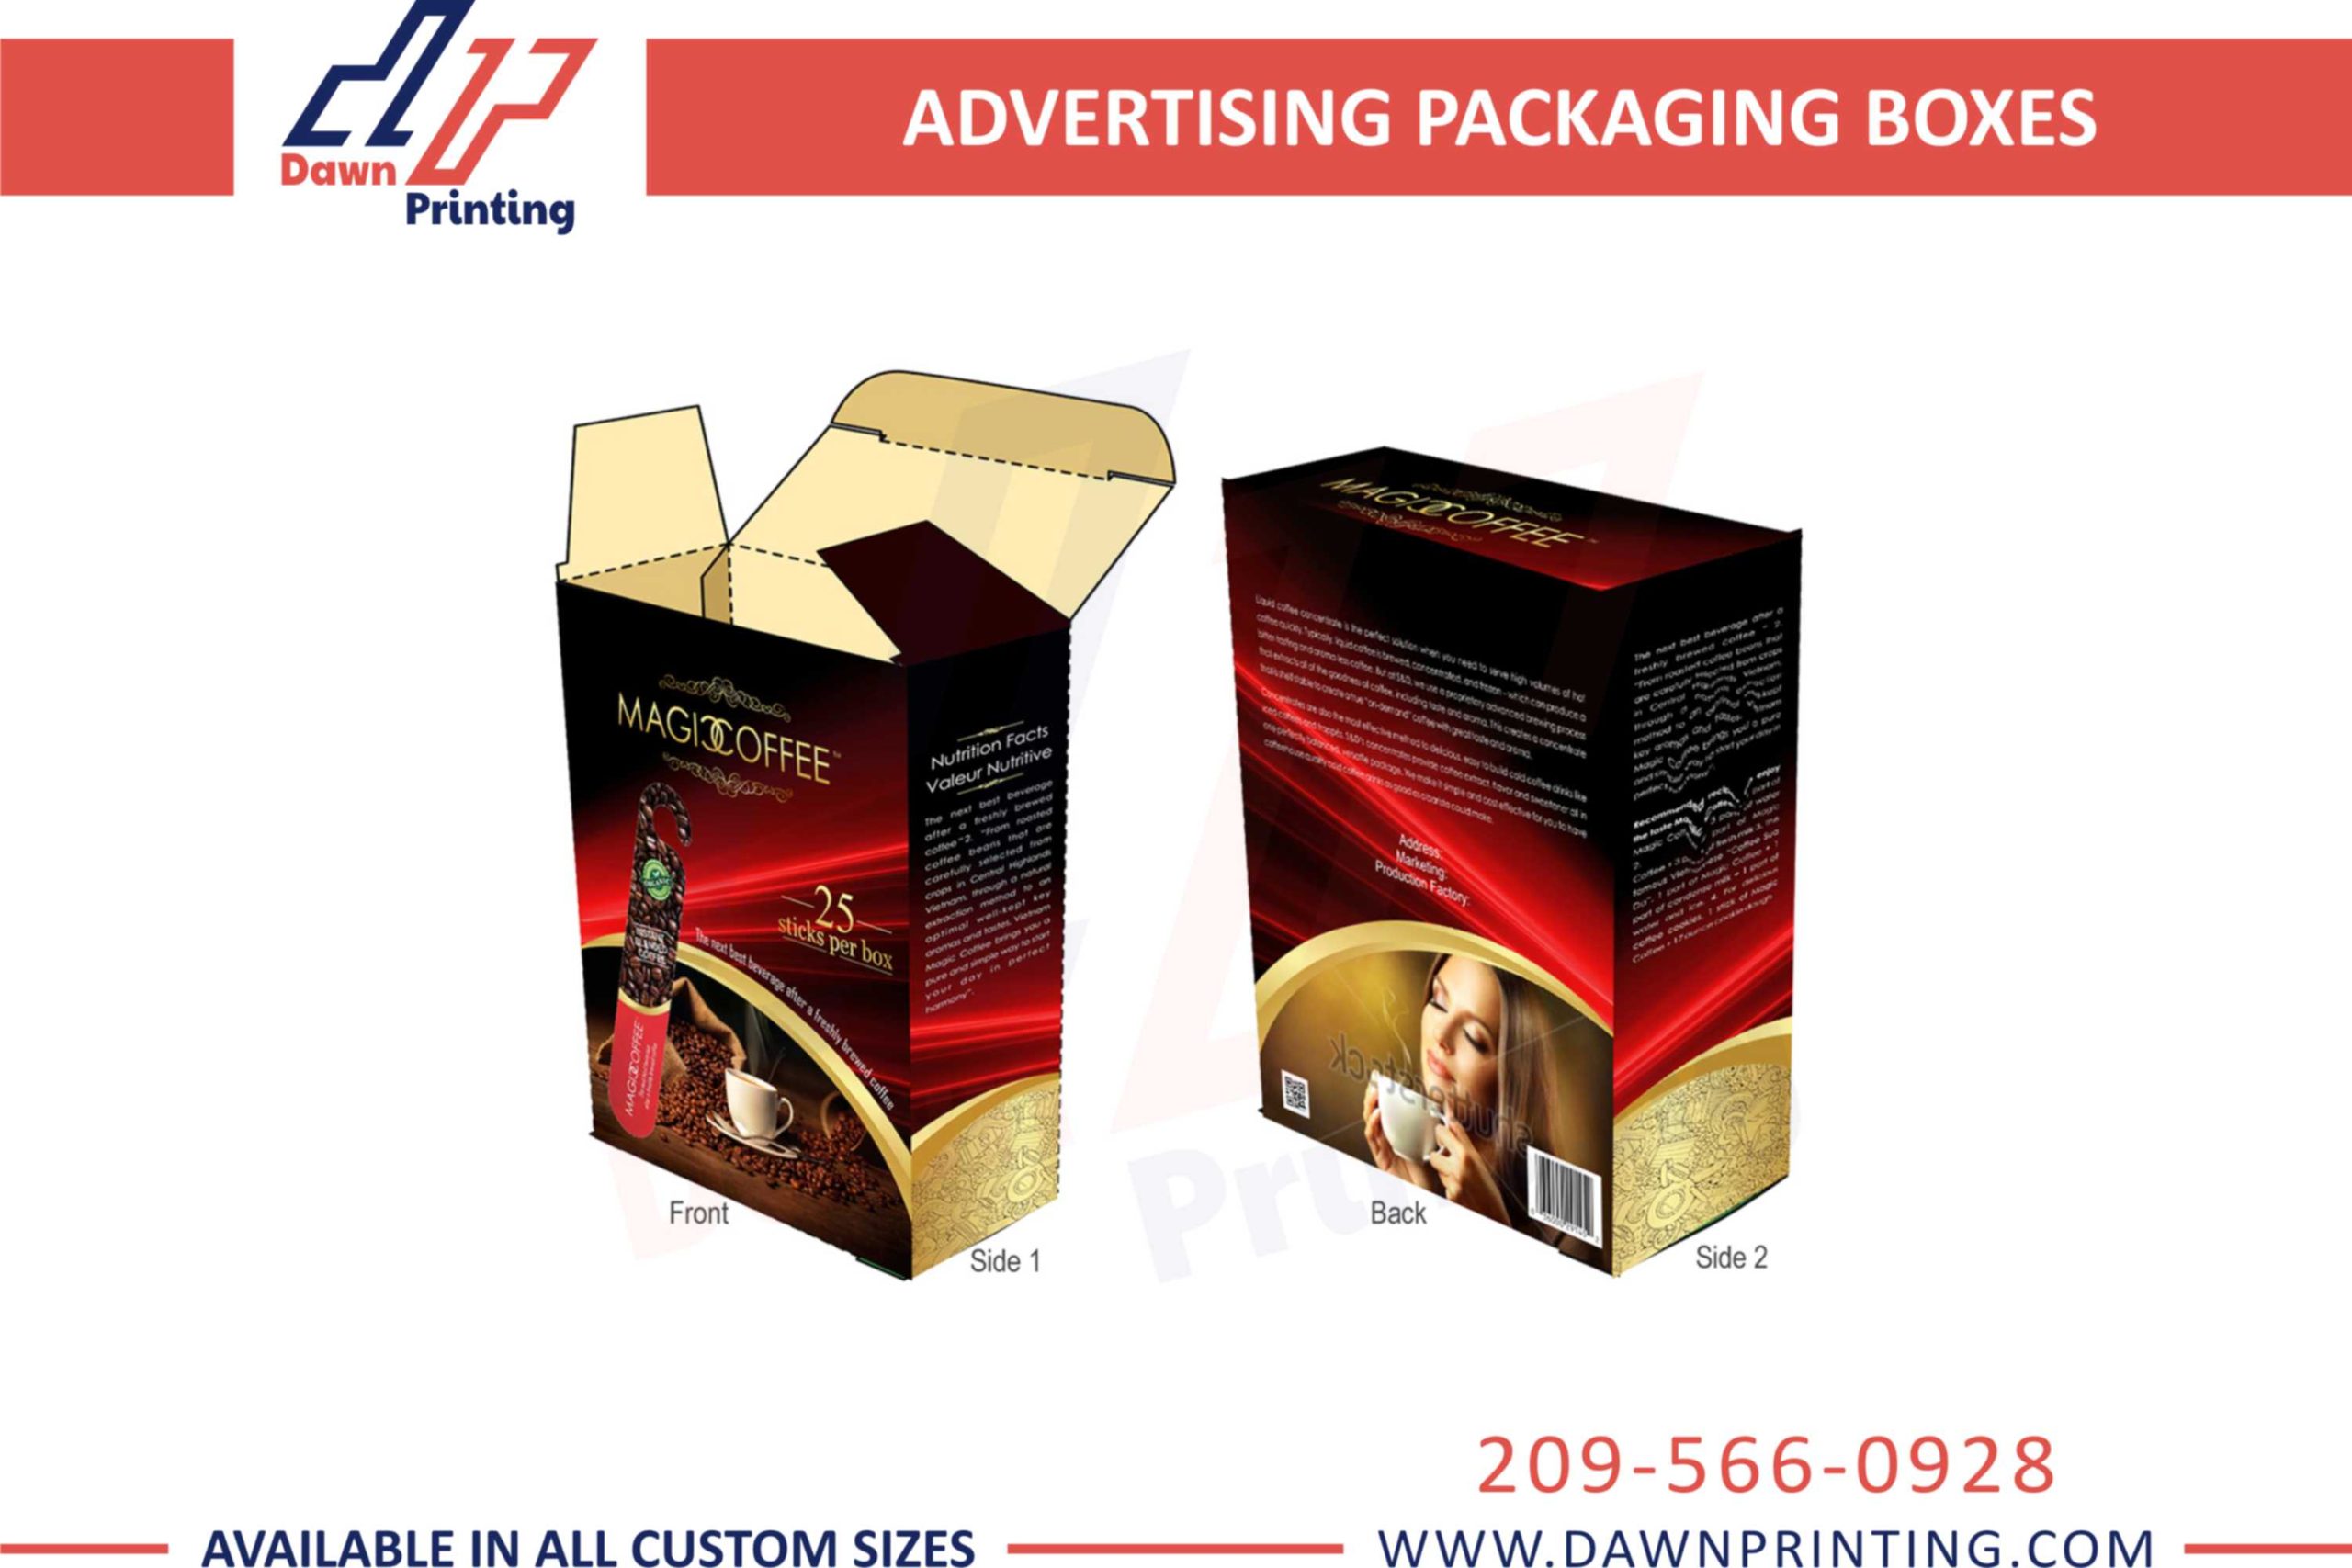 Premium Advertising Packaging Boxes - Dawn Printing